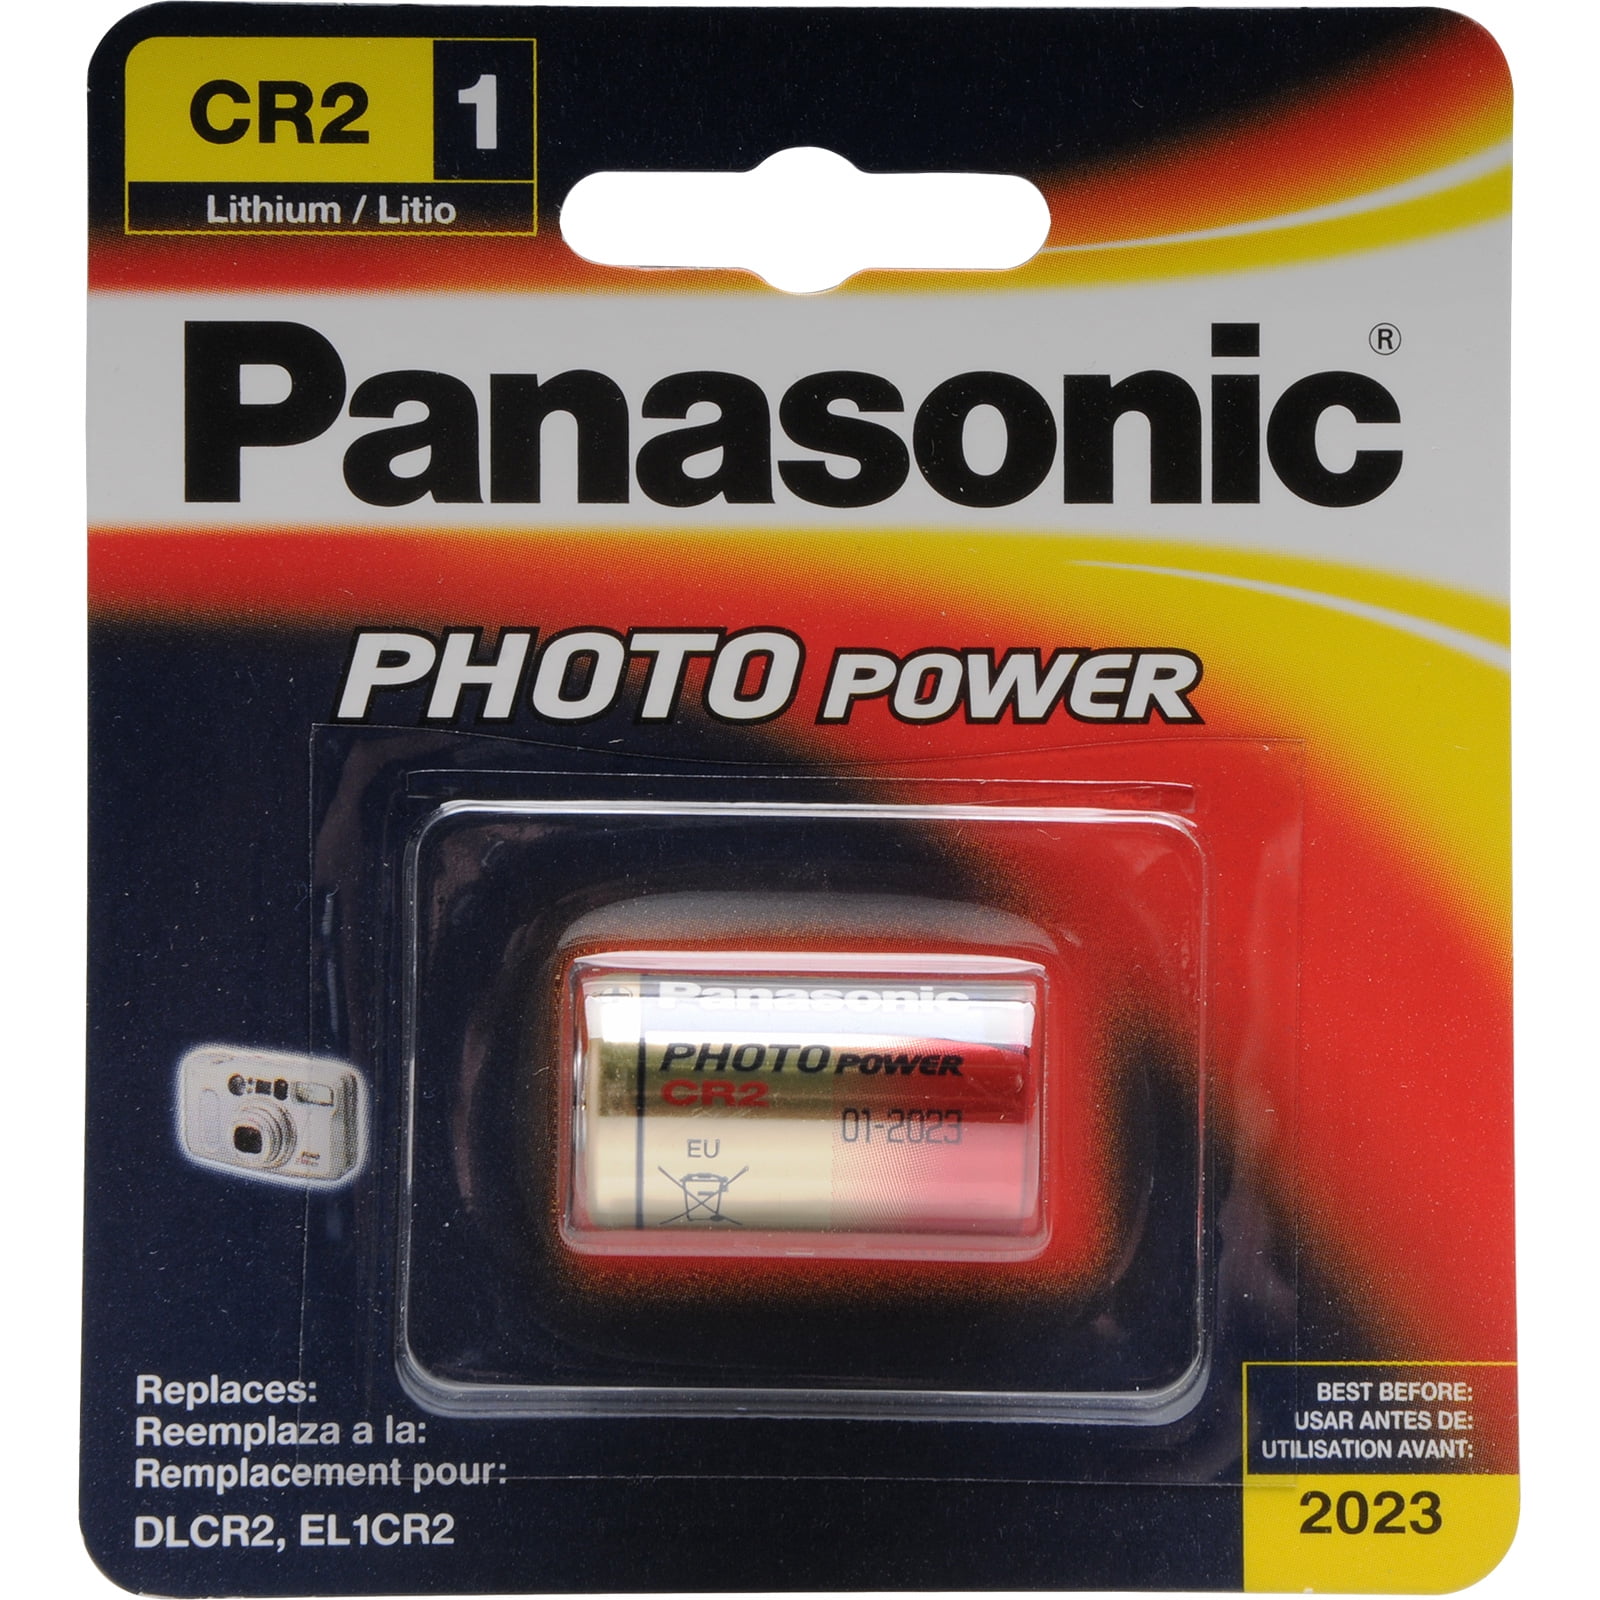 Panasonic CR2 Industrial Lithium Battery DL-CR2 Photo 3V 13770 20 Batteries 